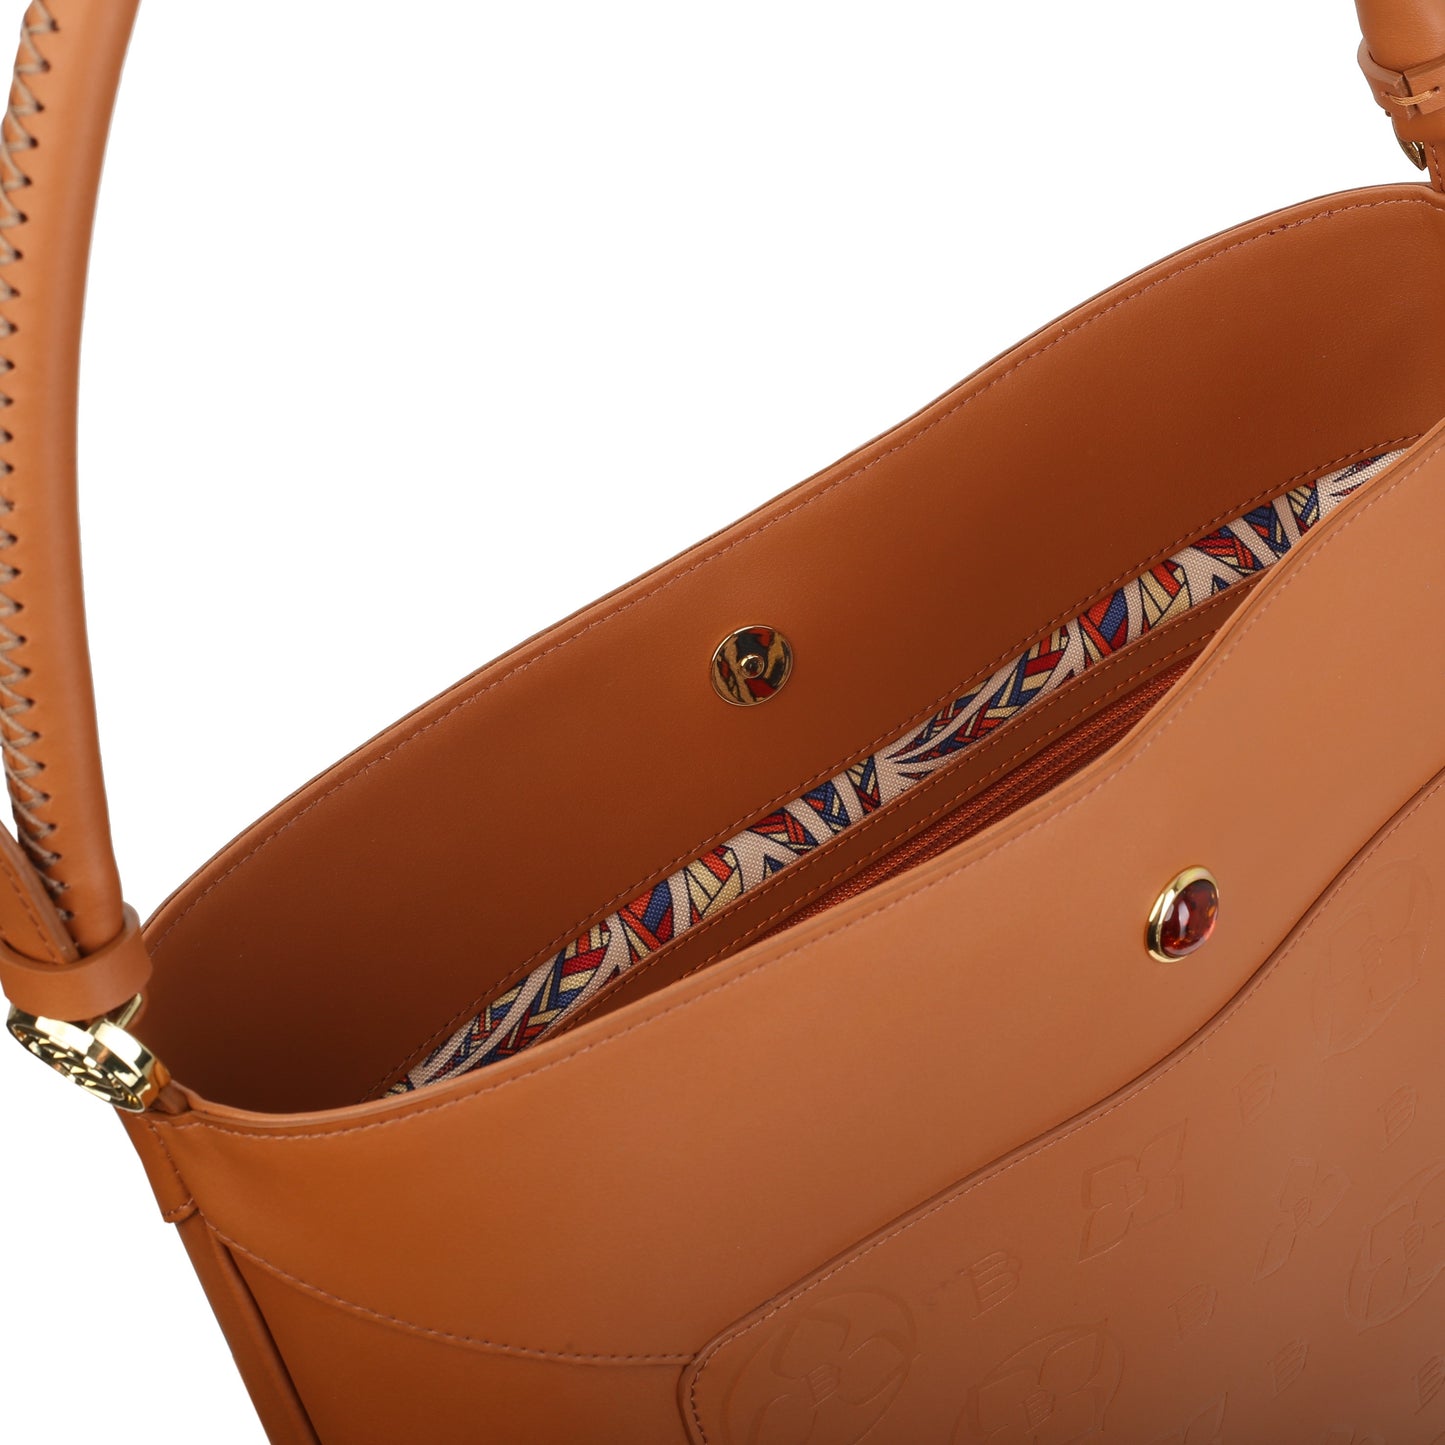 LENNA NAPA COGNAC women's leather handbag